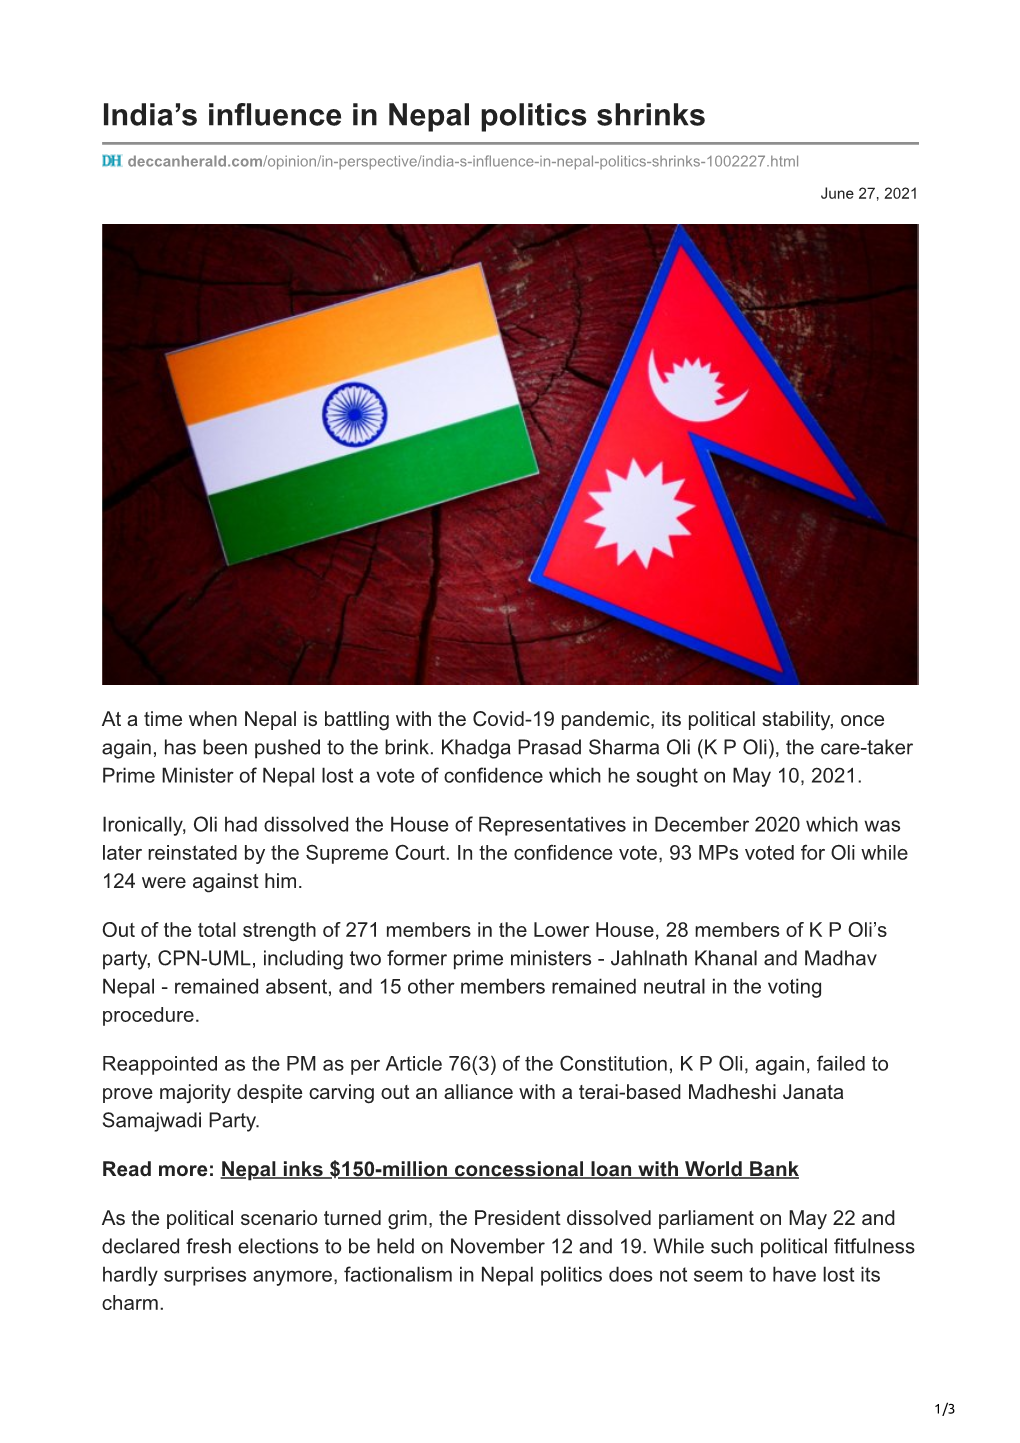 India's Influence in Nepal Politics Shrinks